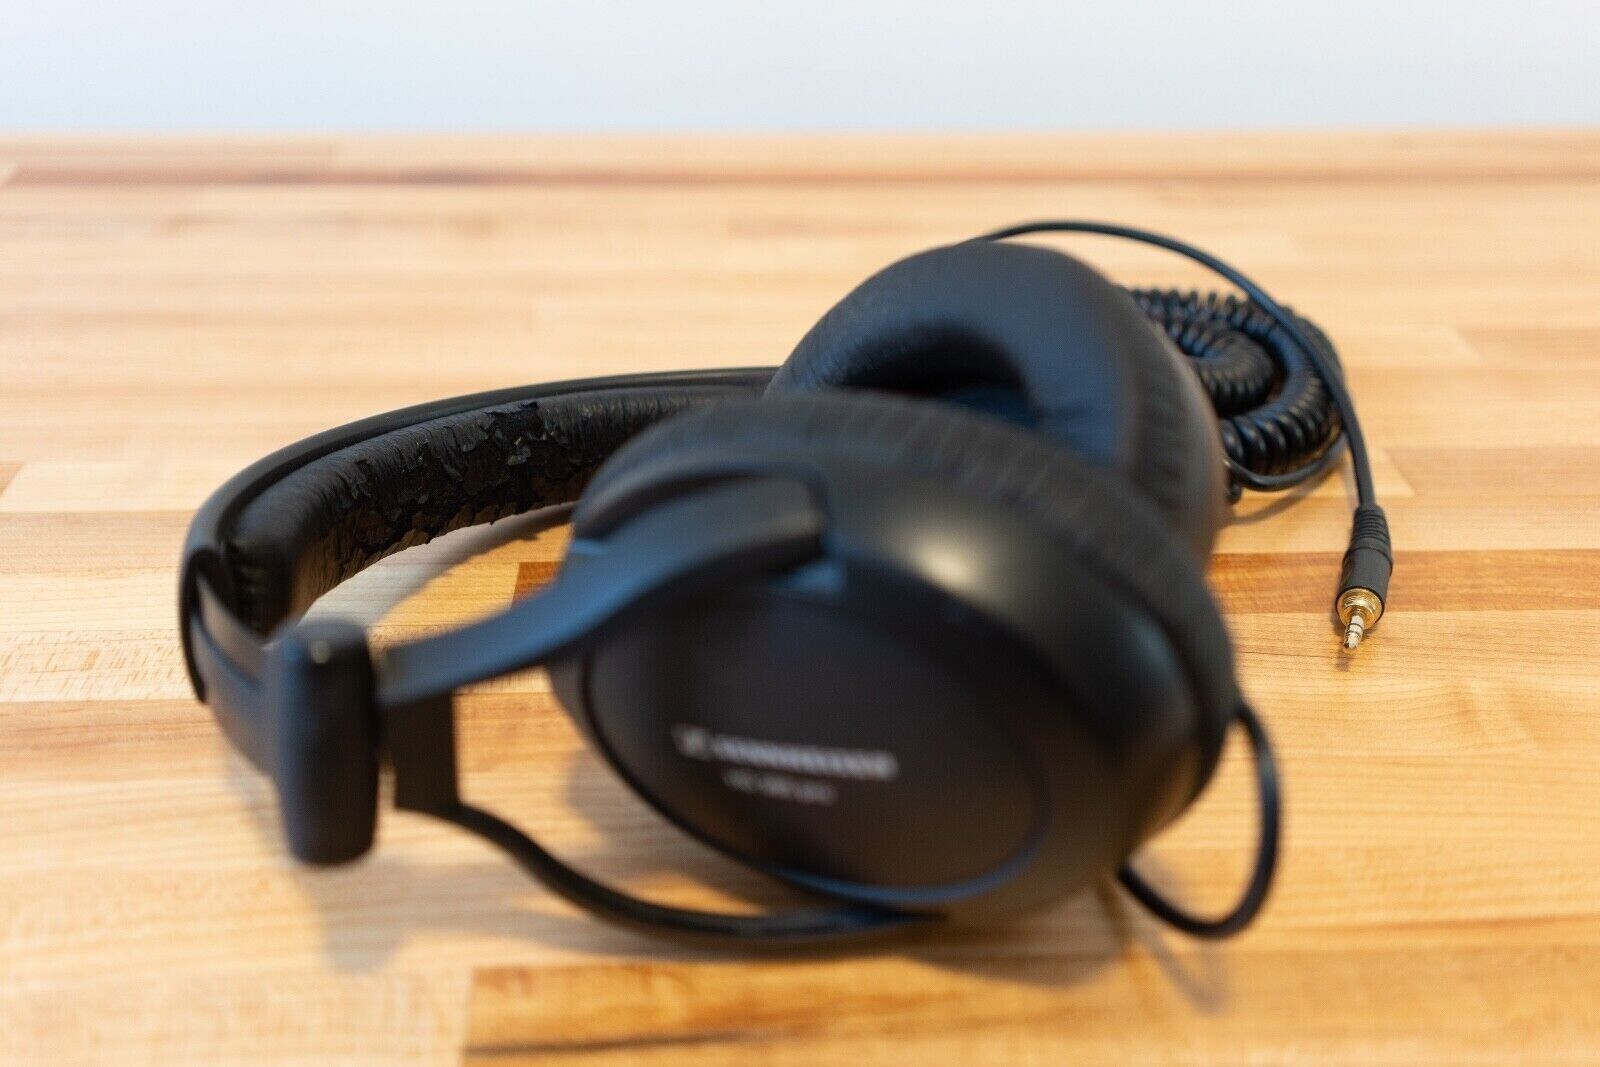 Sennheiser HD 380 Pro headphones, professional studio monitoring